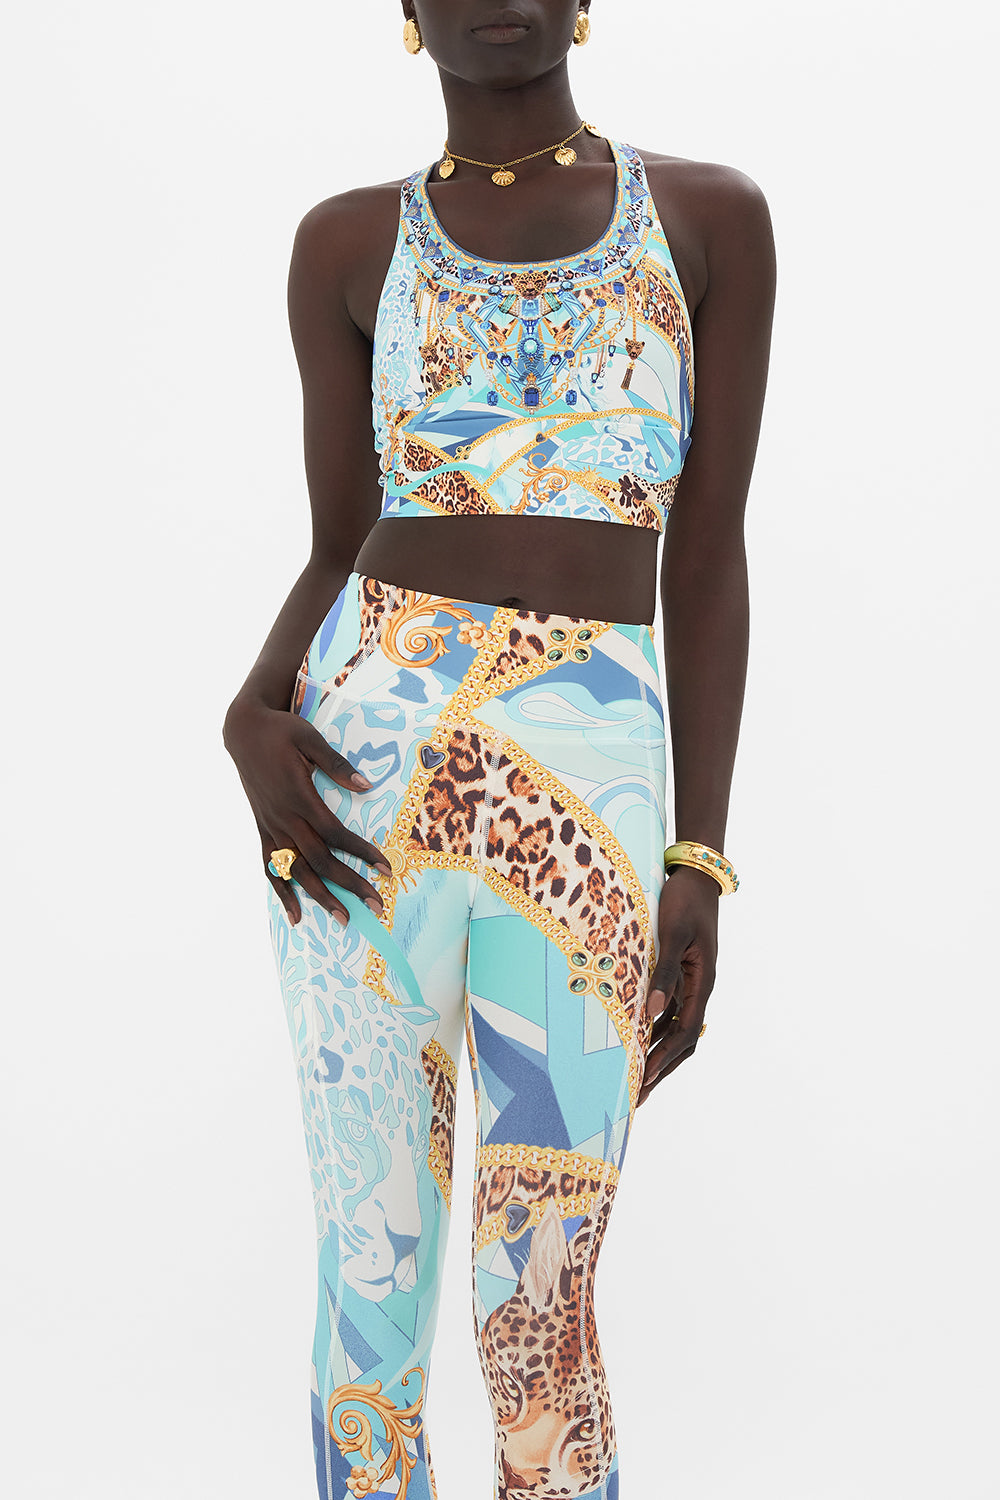 Crop view of model waering CAMILLA activewear crop top in Sky Cheetah print